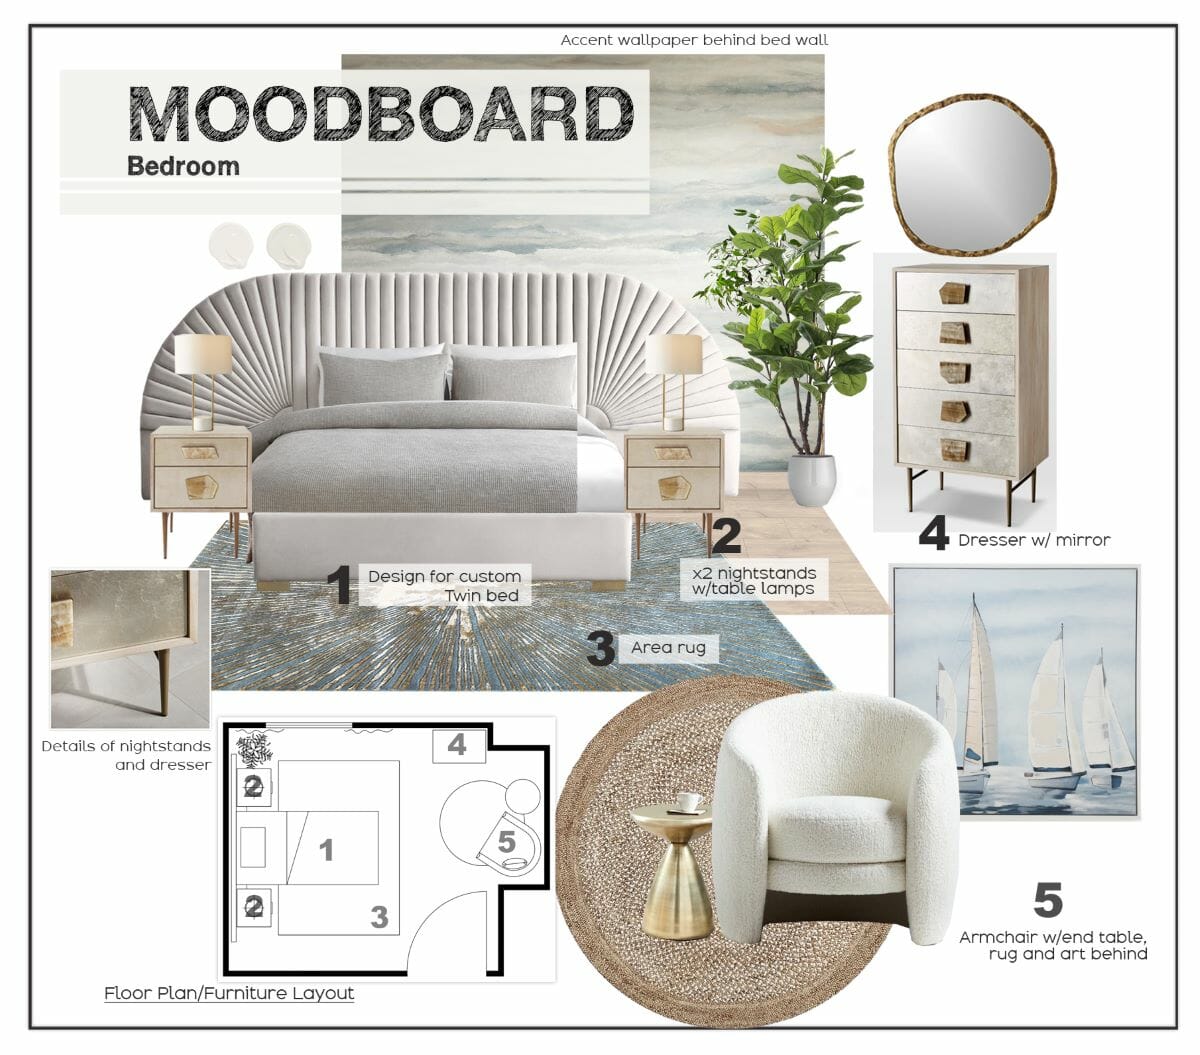 Custom Accessory Interior Design Mood Board & Shopping List 